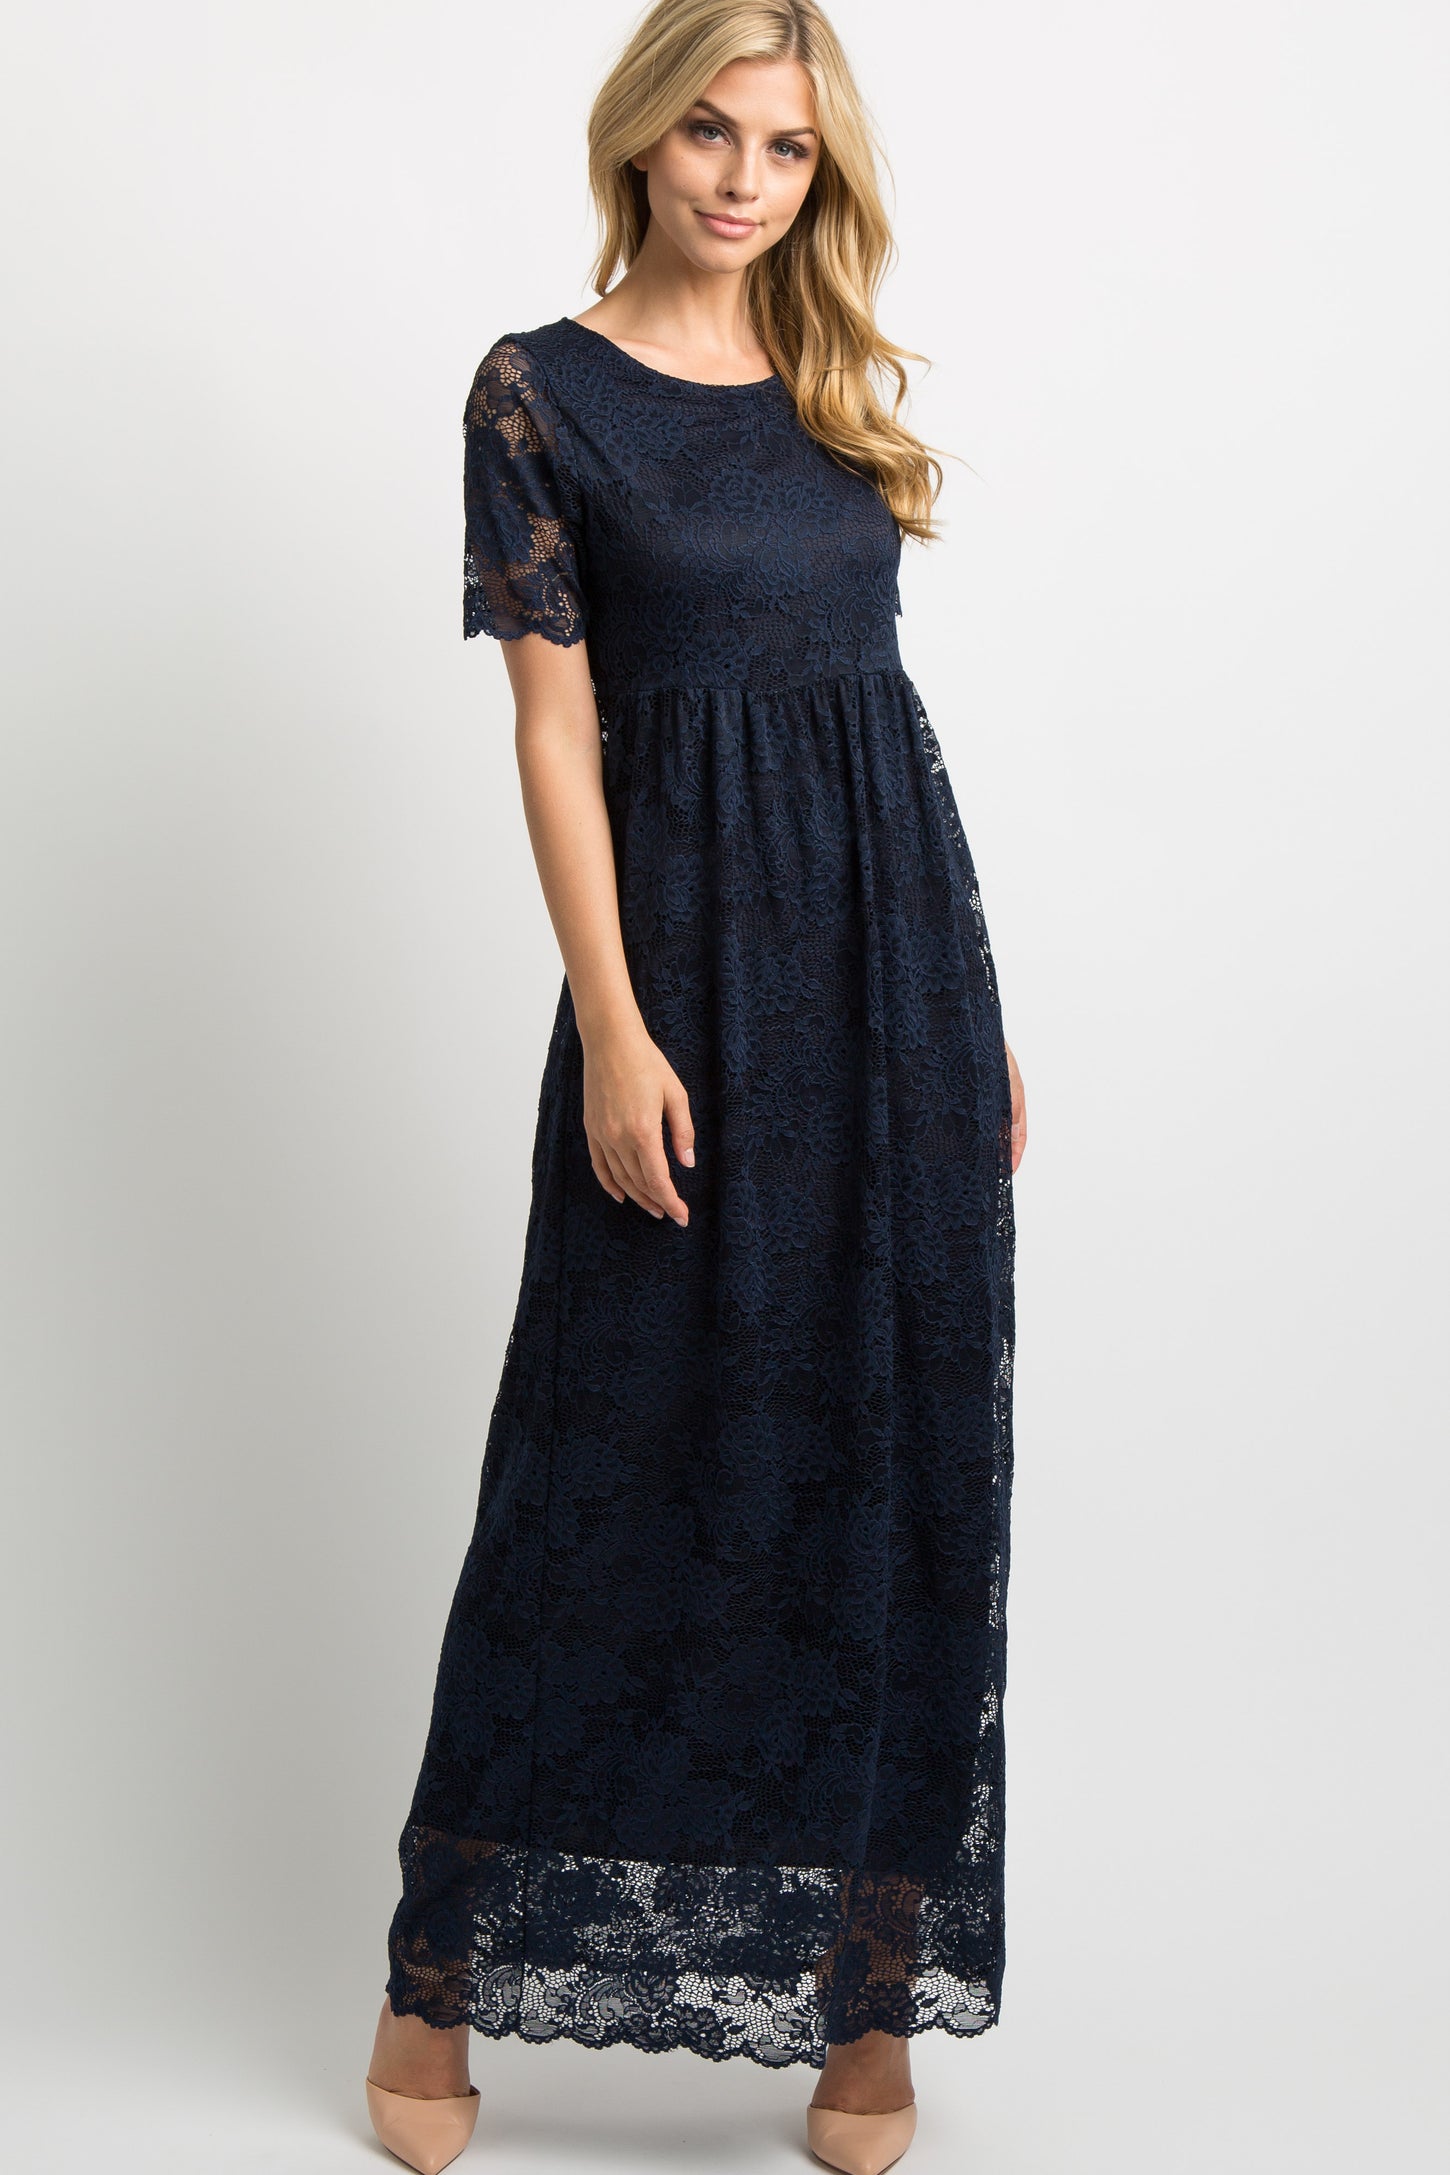 Navy Blue Lace Overlay Maxi Dress